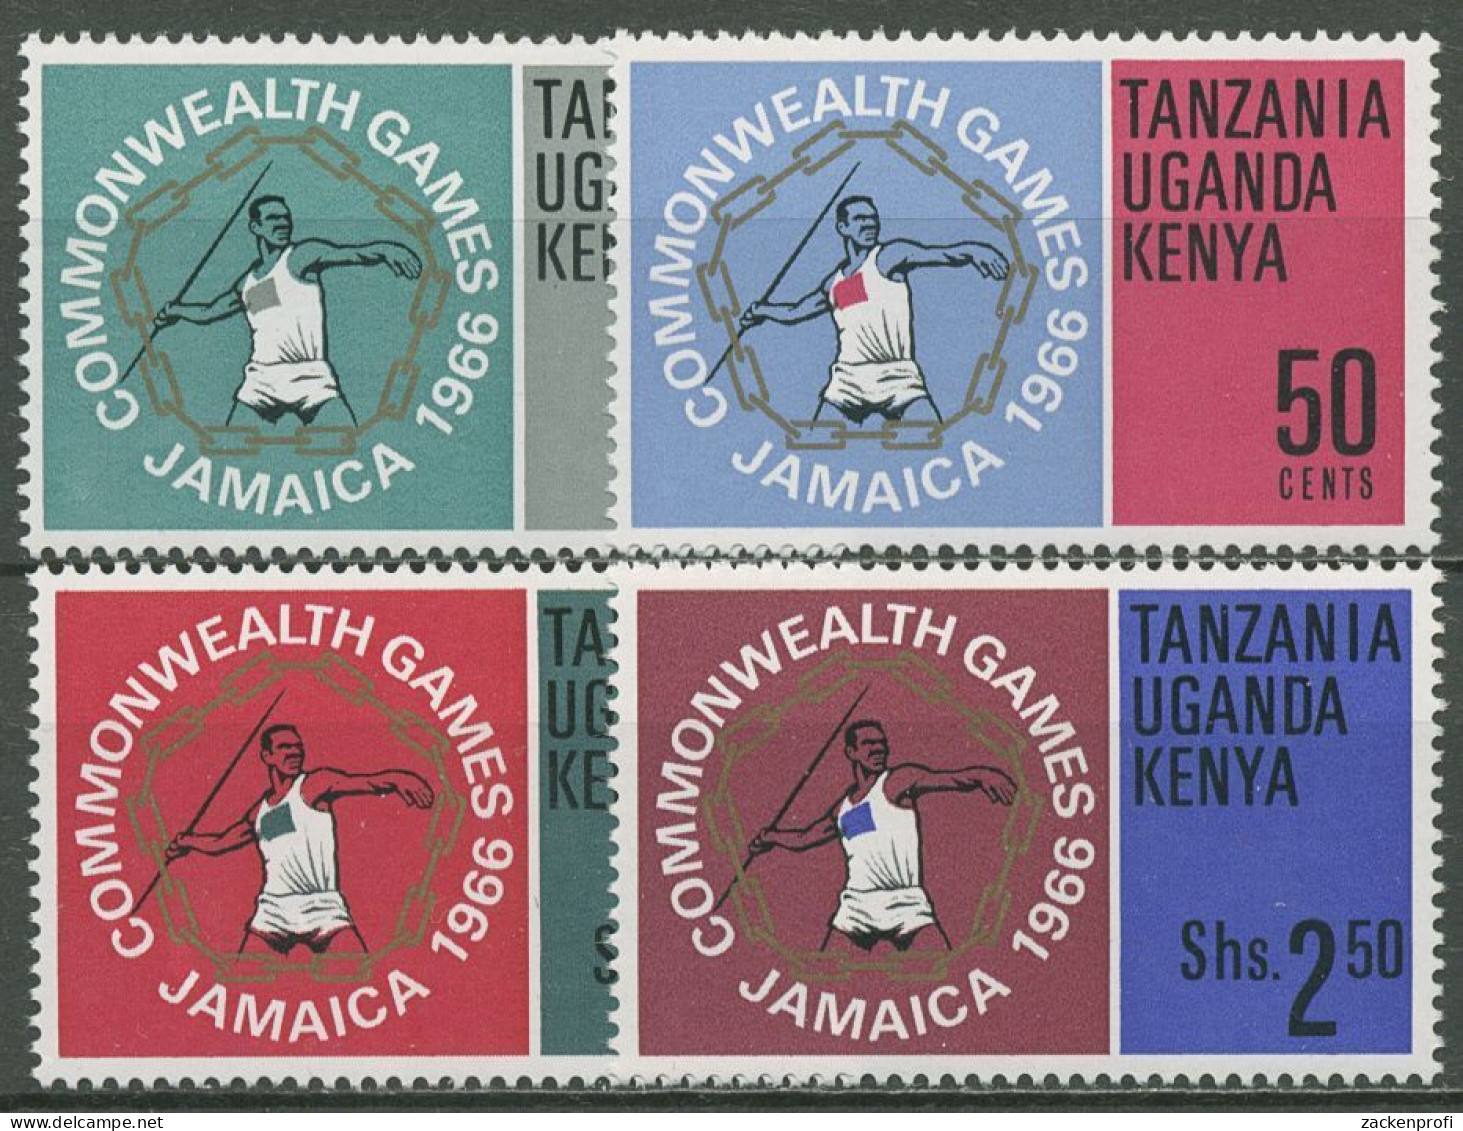 Ostafrikanische Gem. 1966 Commonwealth-Spiele Jamaica 152/55 Postfrisch - Kenya, Uganda & Tanzania